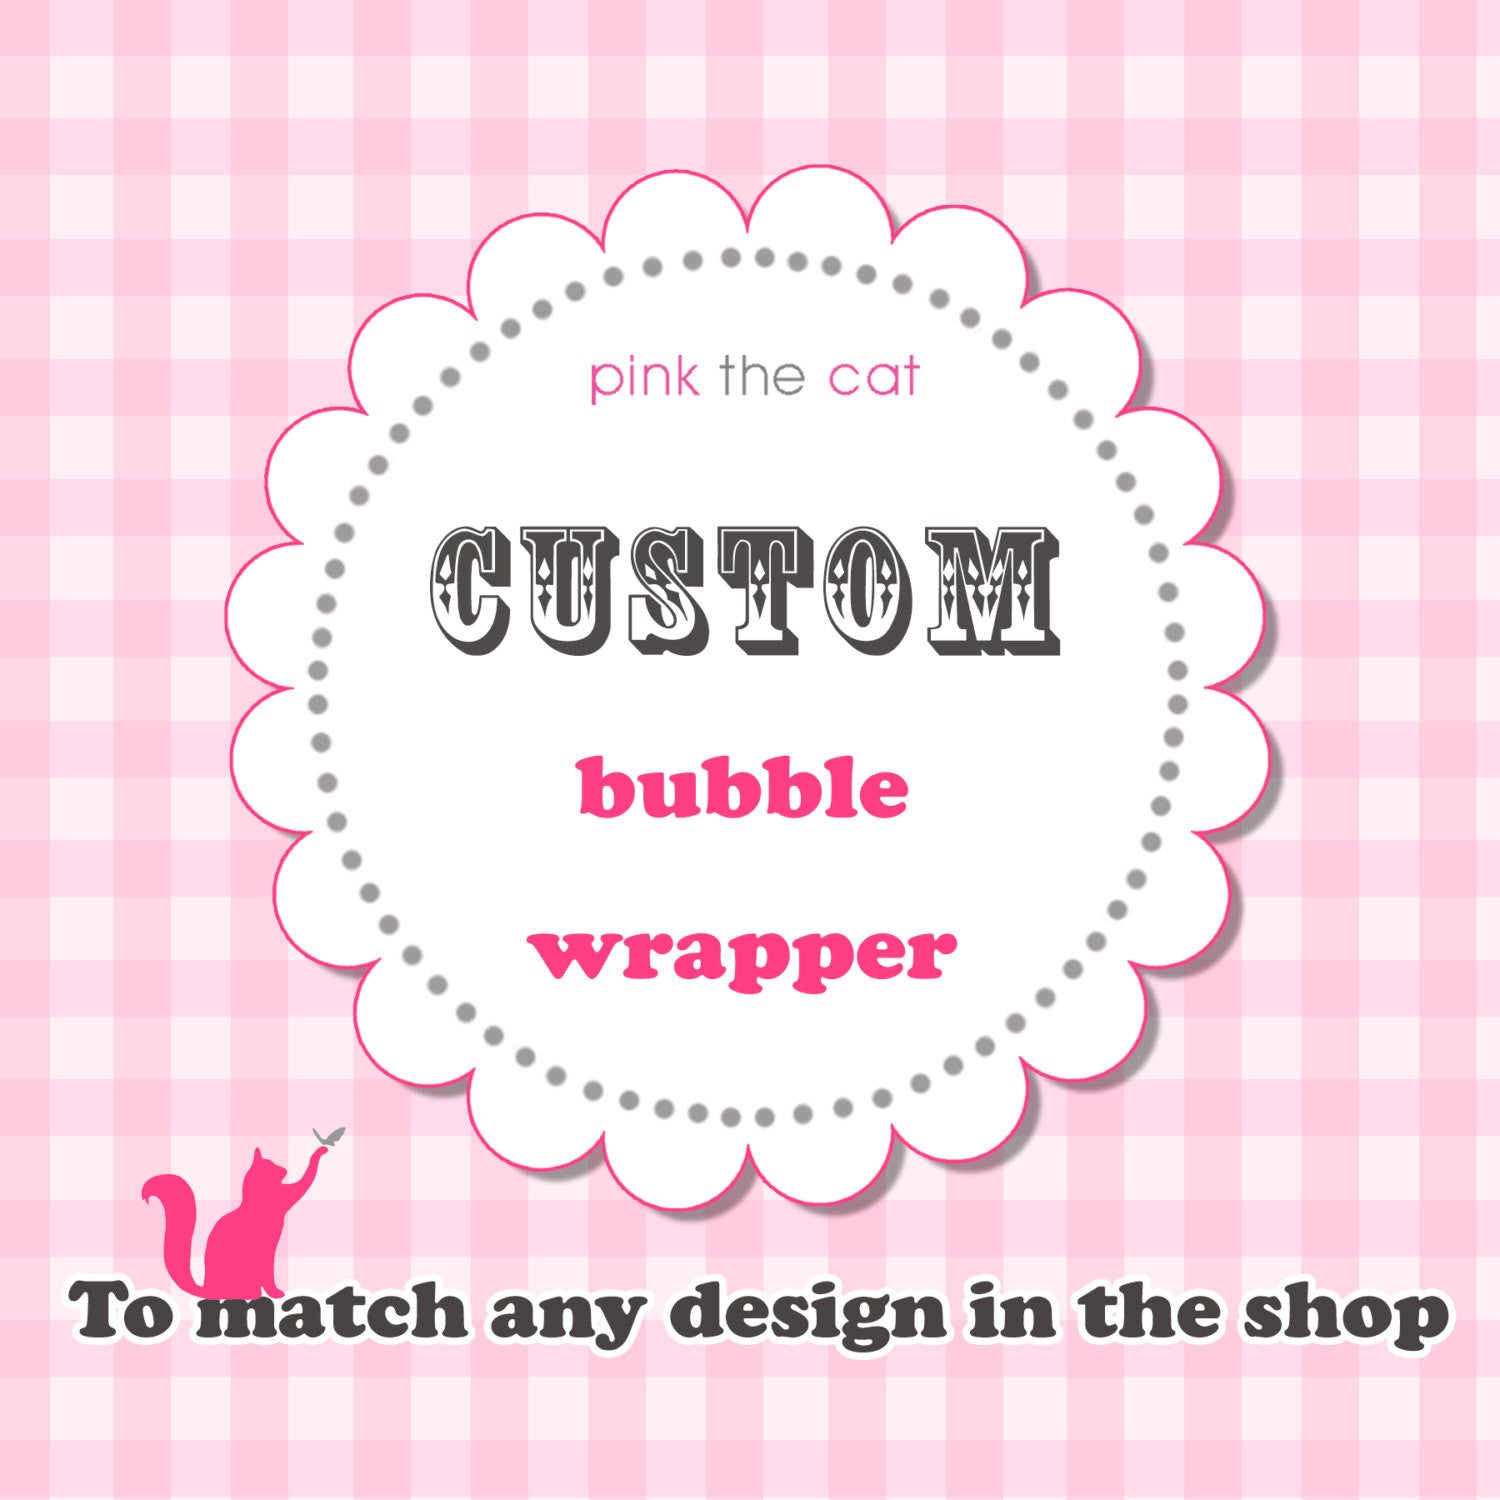 bubble wrapper